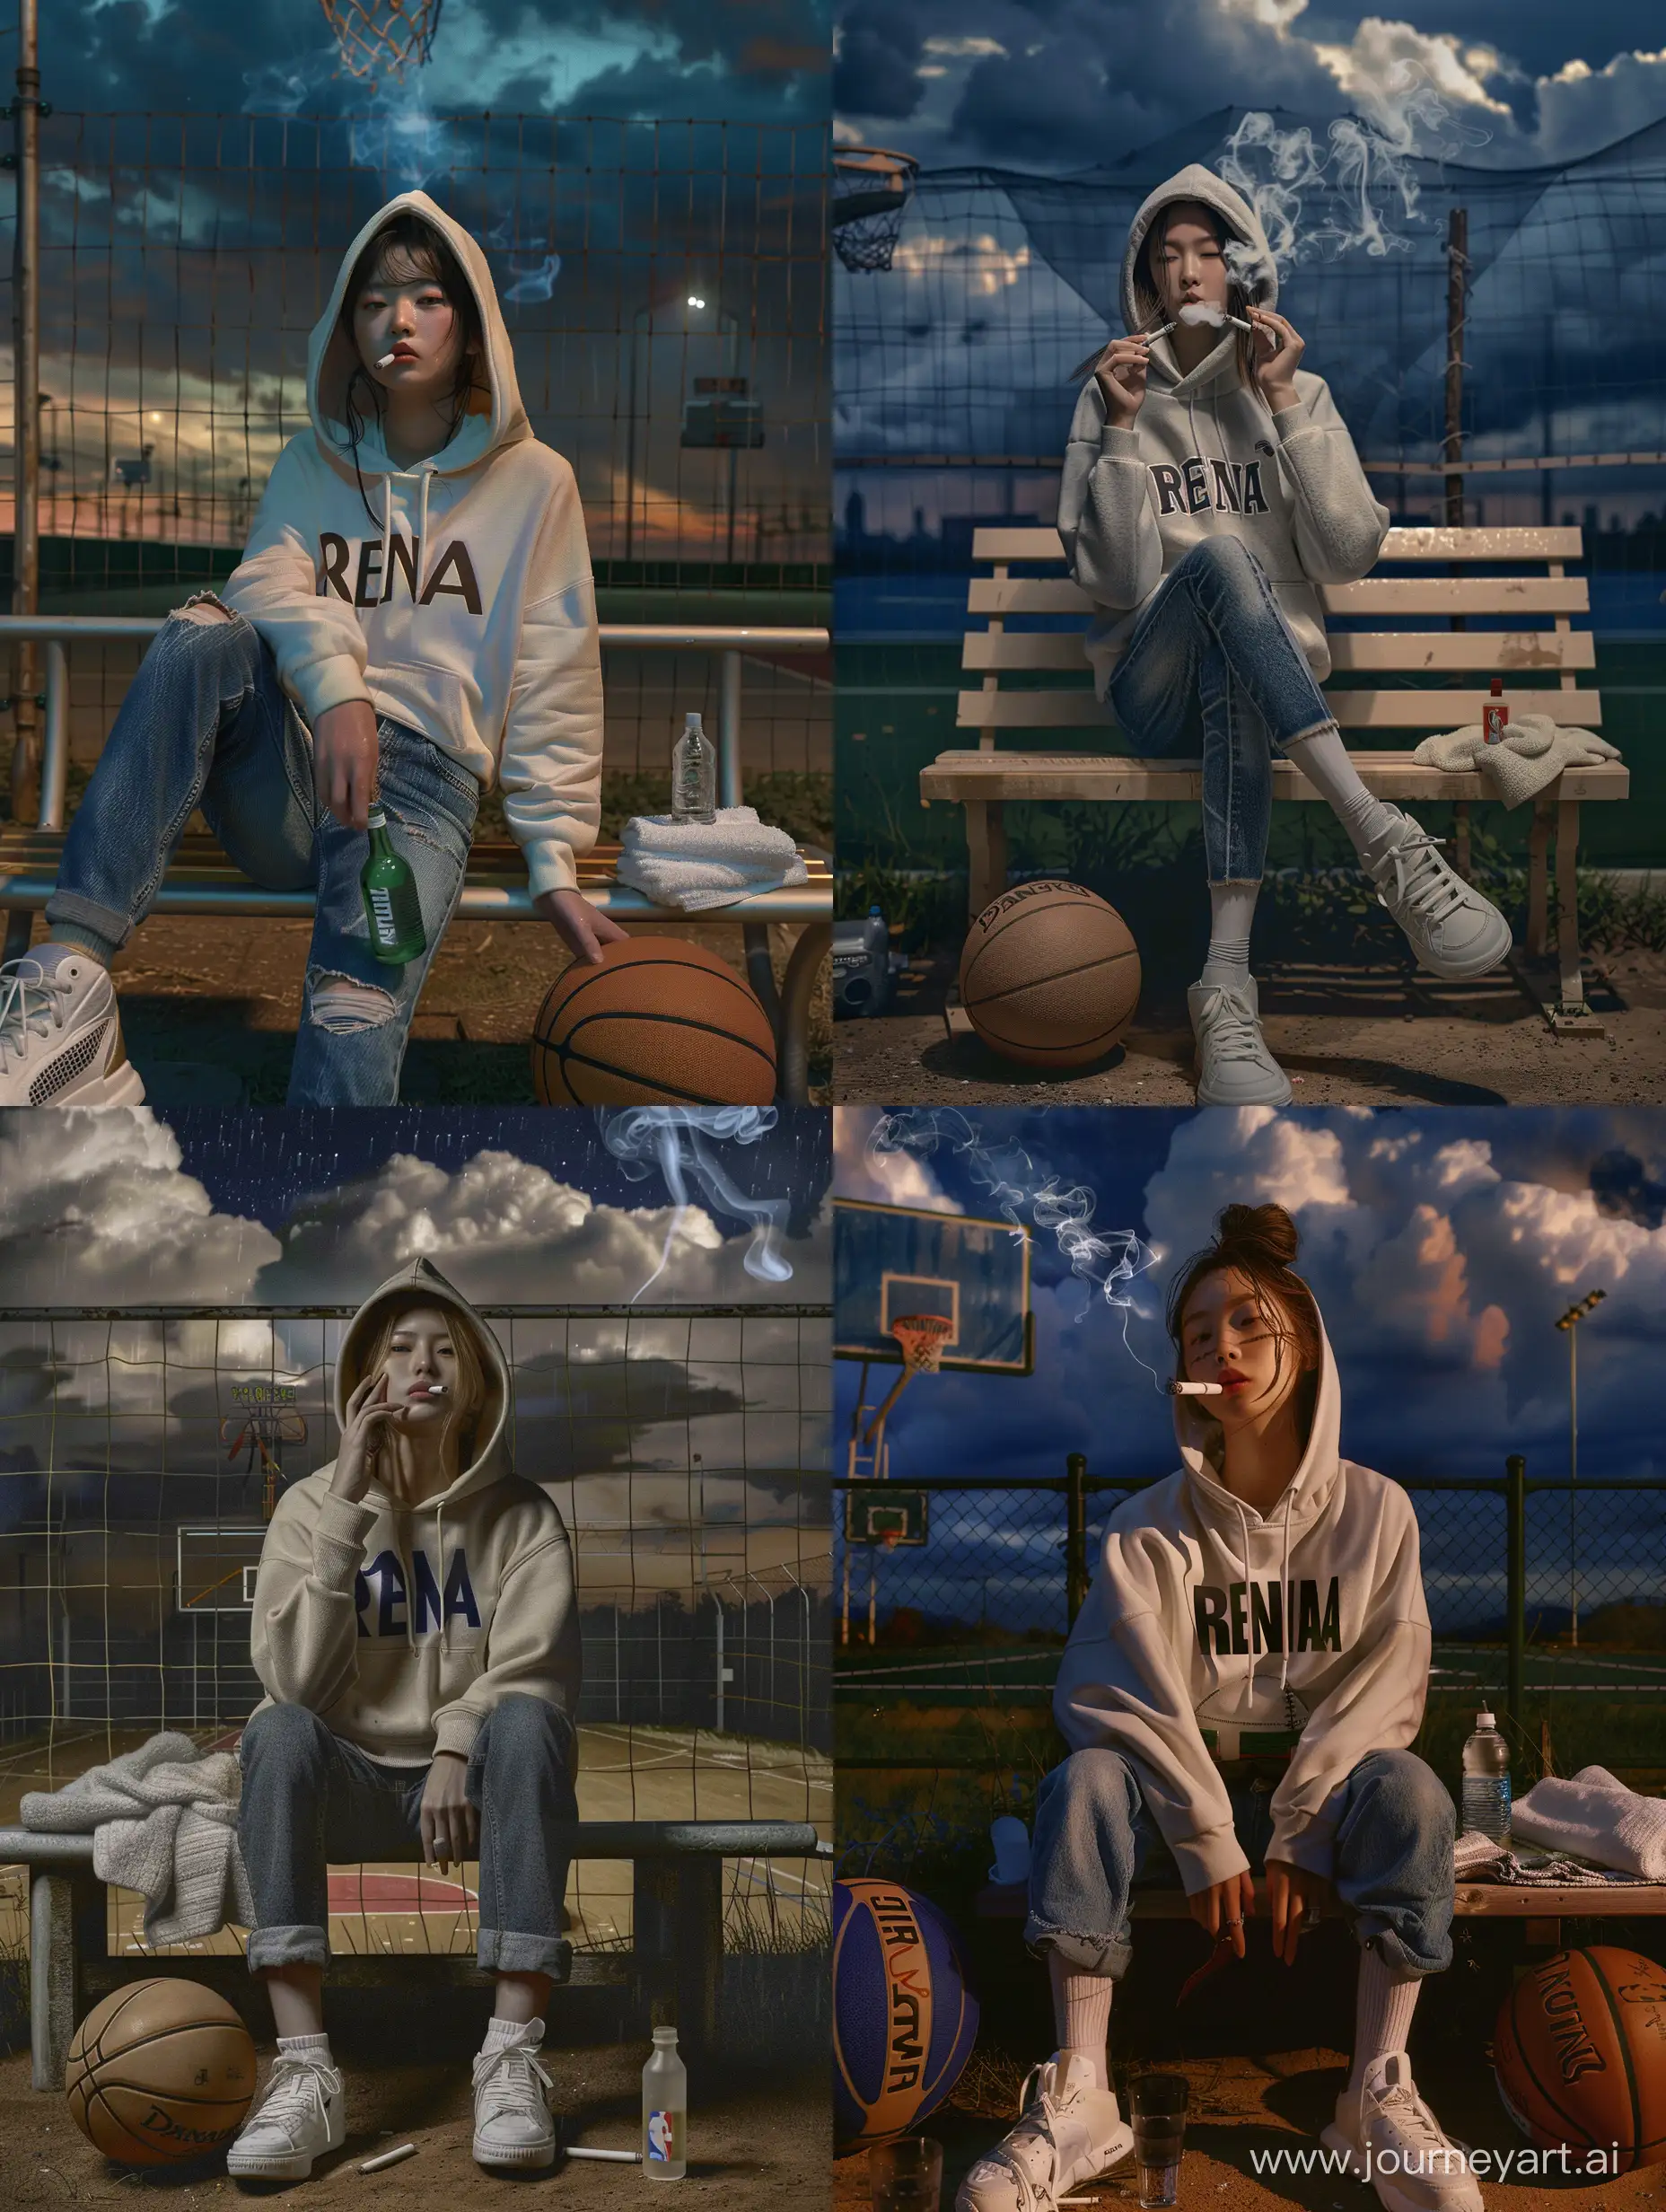 Realistic-Korean-Woman-Smoking-on-Basketball-Court-at-Night